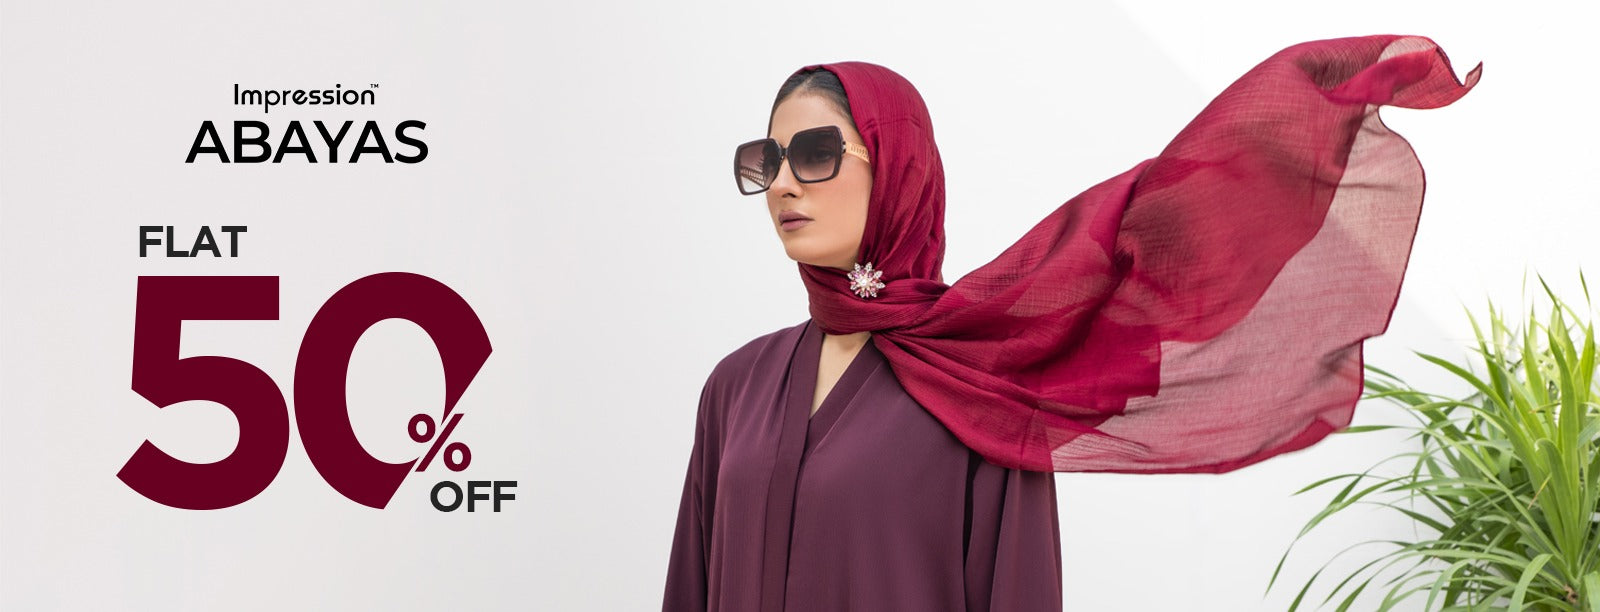 Abaya|Premium Abaya| Online Abaya|